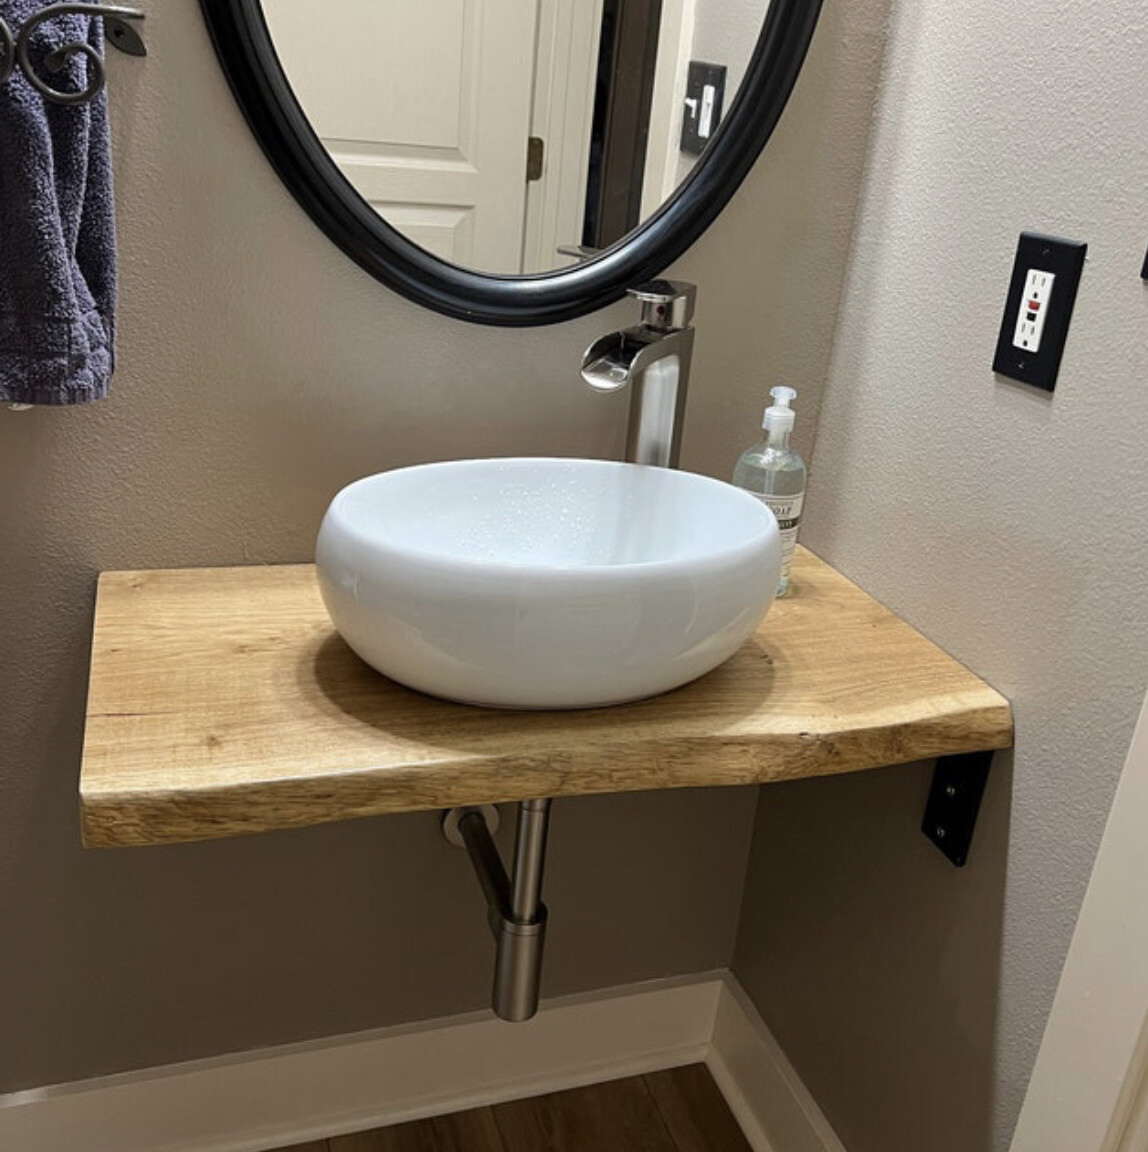 Live Edge Solid Oak Wood Character Rustic wood Bespoke Rustic wash stand sink unit bathroom vanity unit Wooden vanity countertop shelf